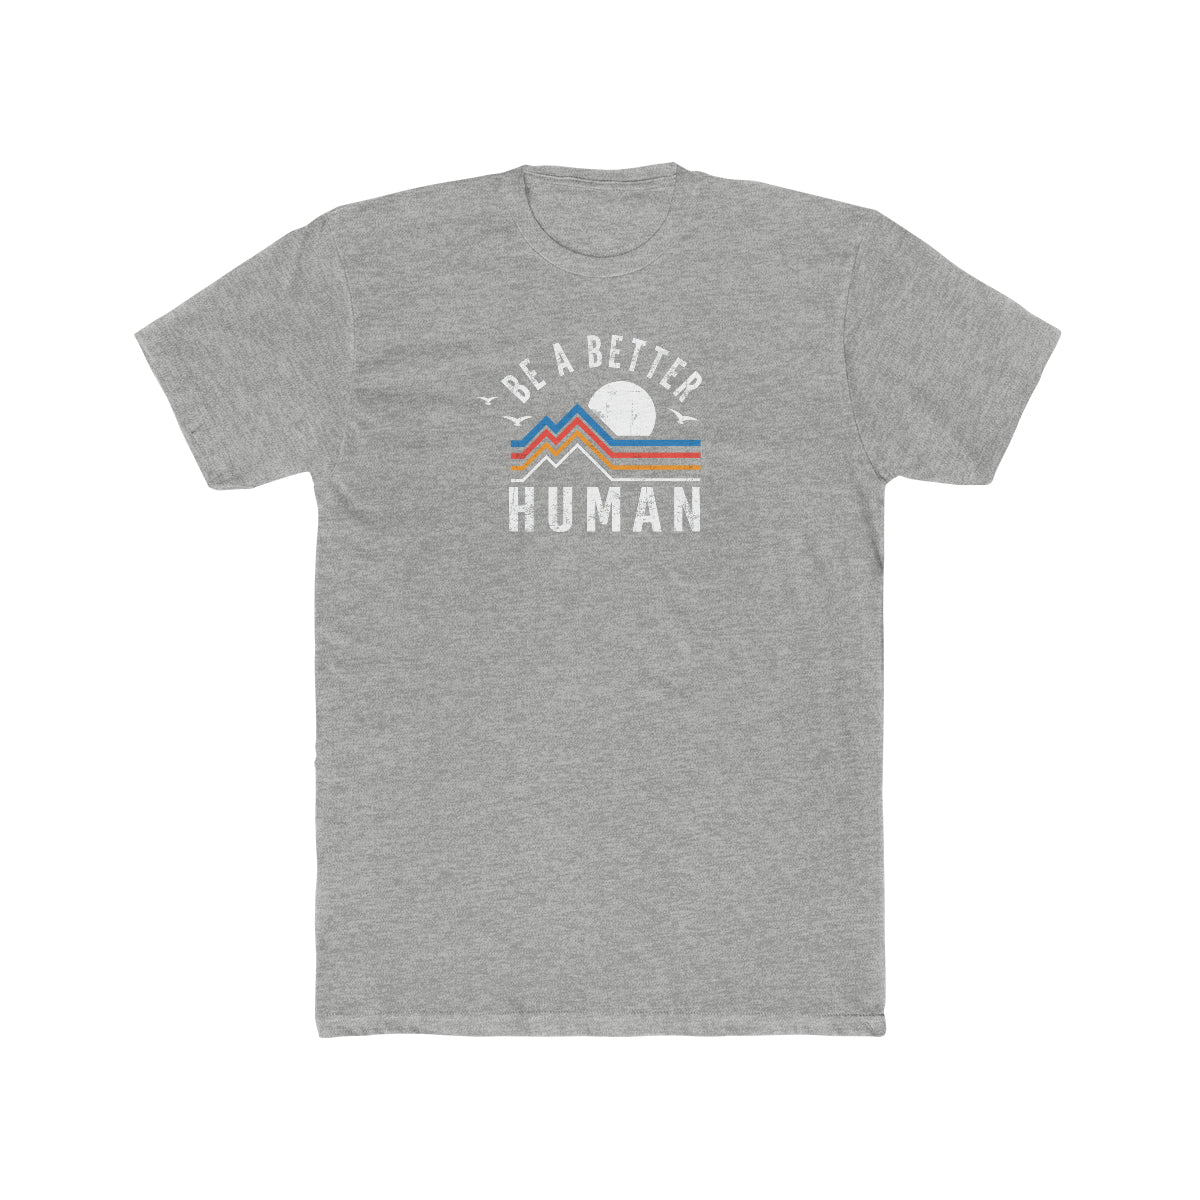 Retro Mountain - Be A Better Human® Men's T-Shirt